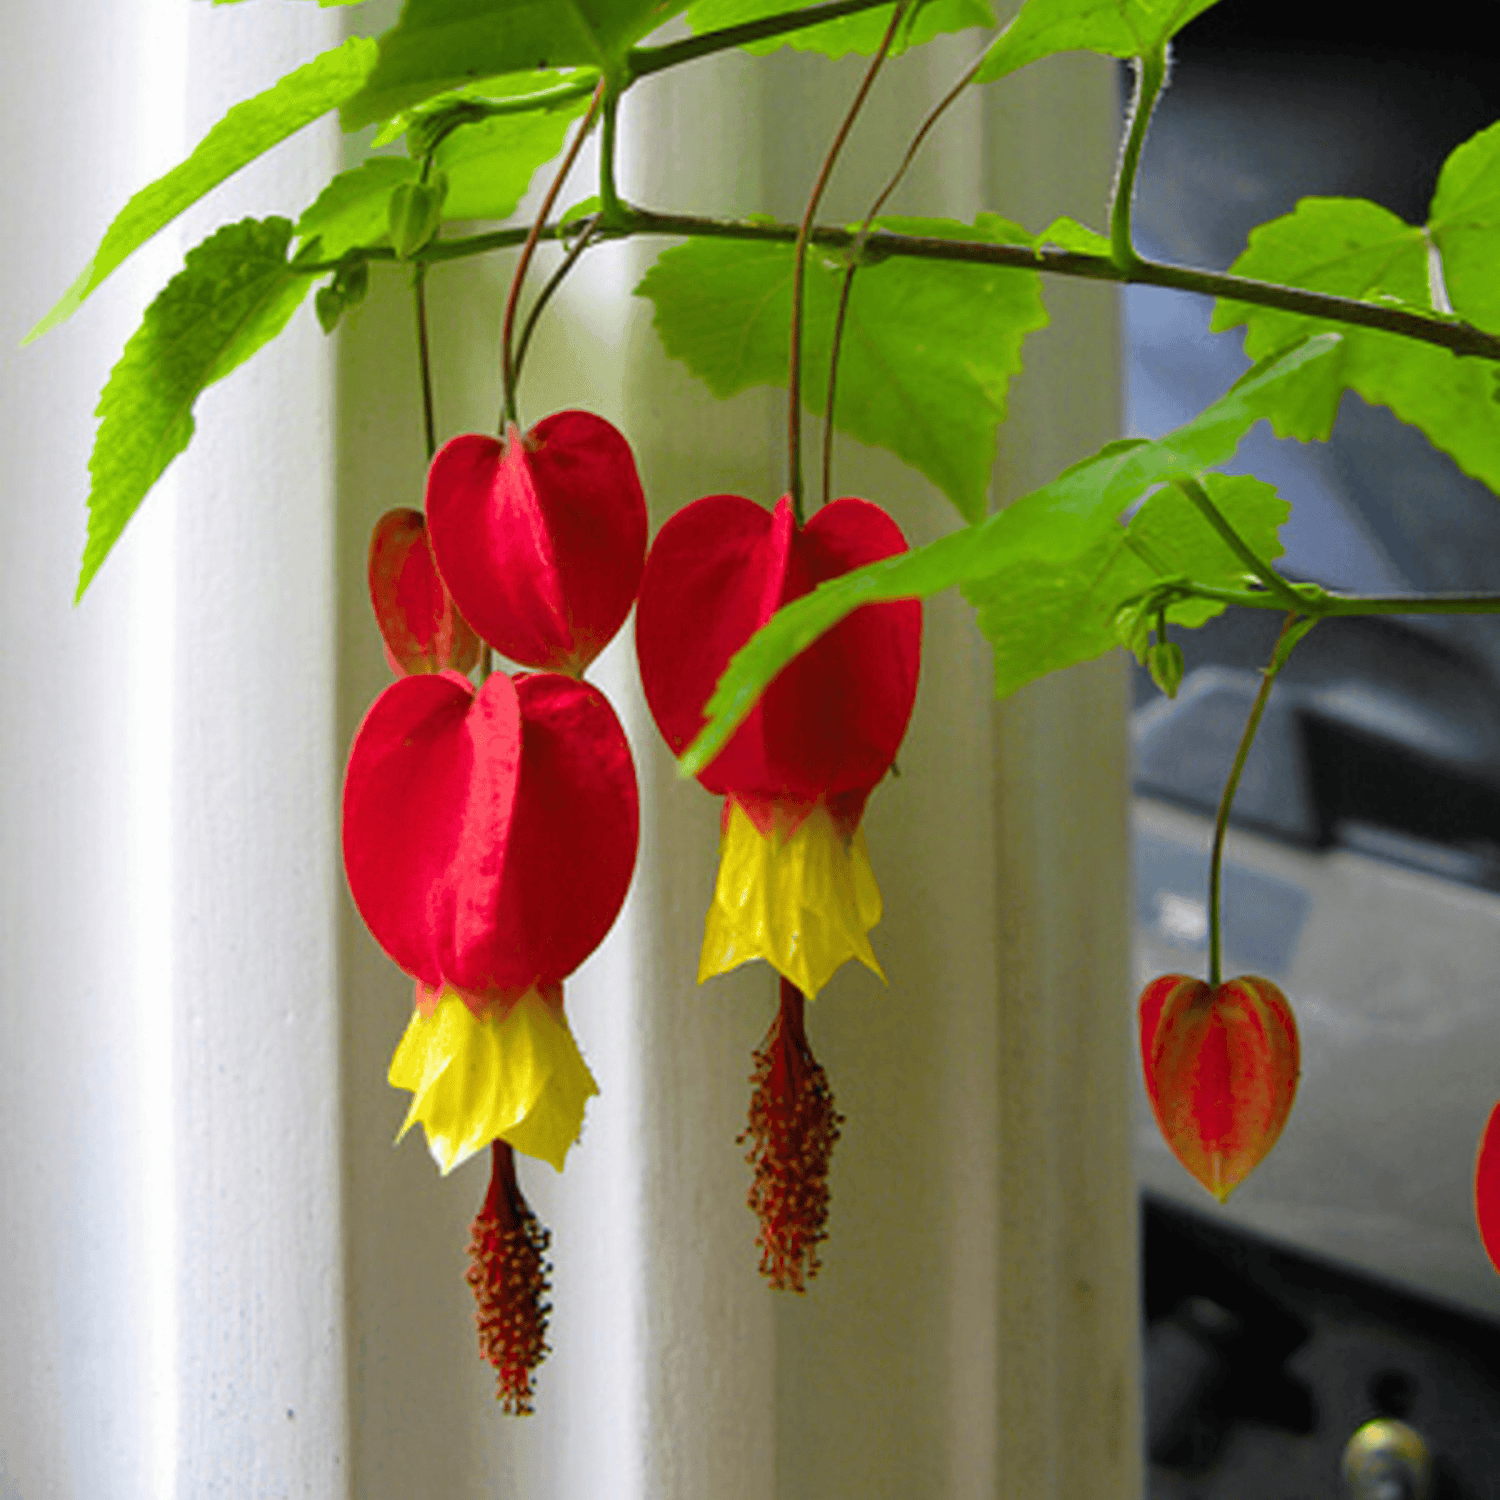 Chinese Lantern (Abutilon megapotamicum) Rare Flowering Live Plant